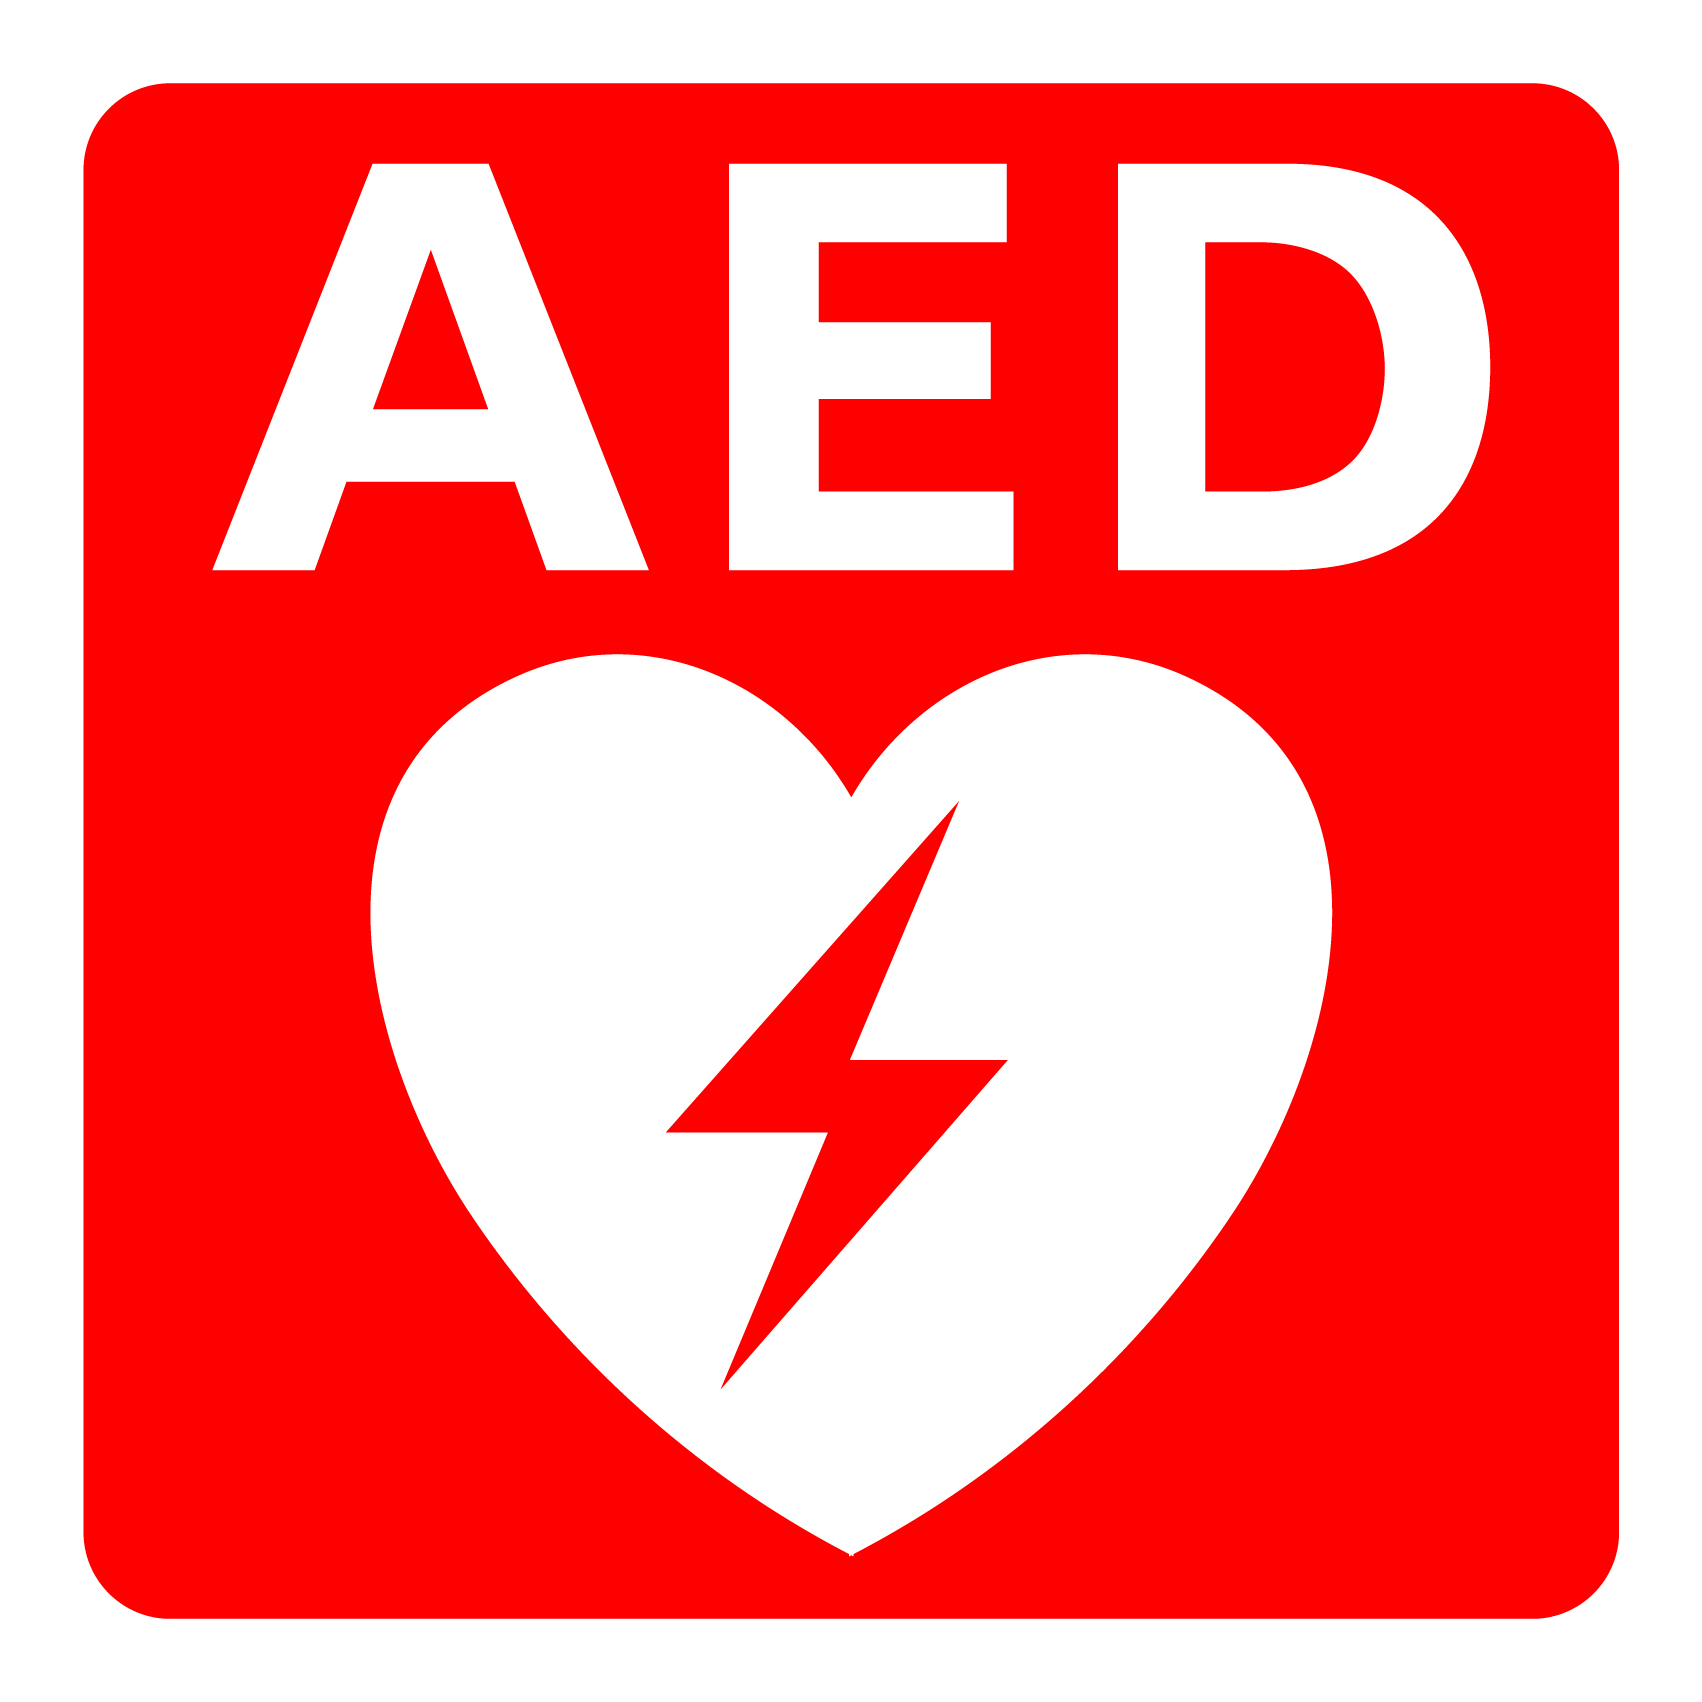 AED 体外式除細動器のピクトグラム